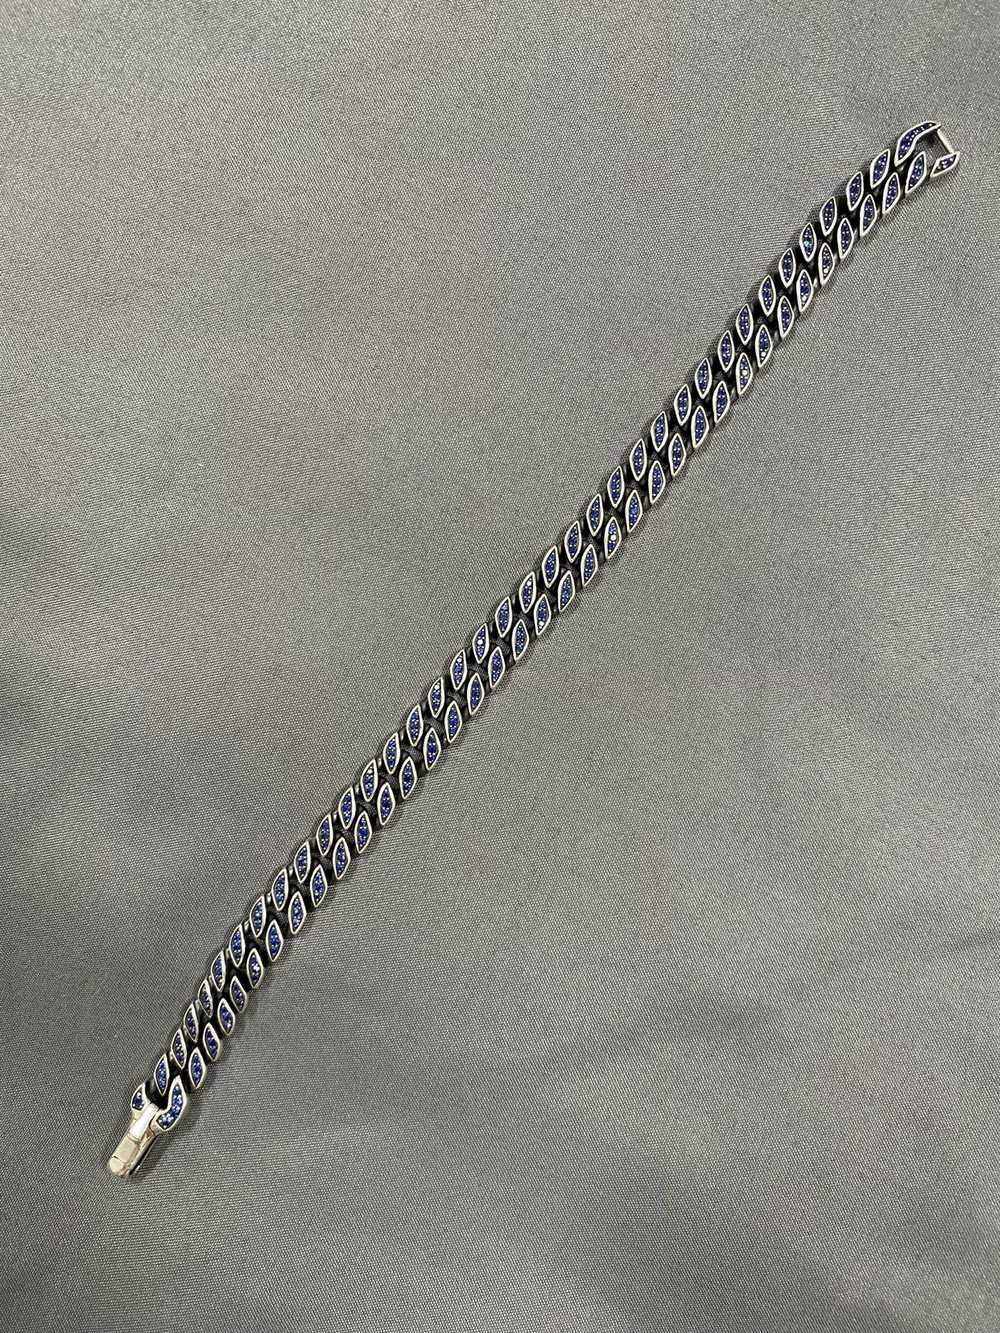 David Yurman Men's Curb Chain Bracelet 8mm - image 2